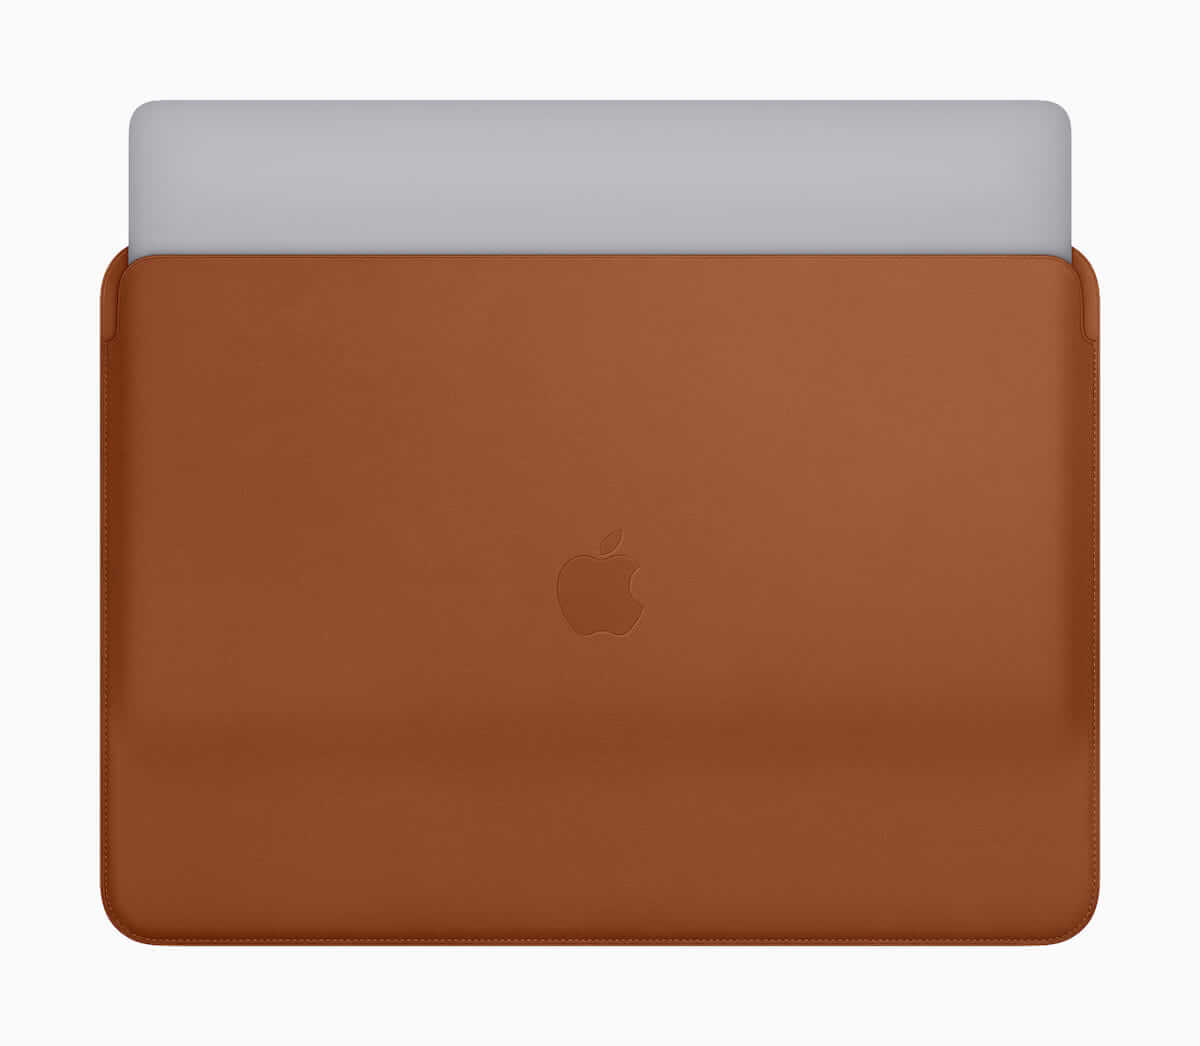 MacBook Proのための高級感漂うレザースリーブ3色が新登場！ technology180715_macbook-leather-sleeve_01-1200x1046